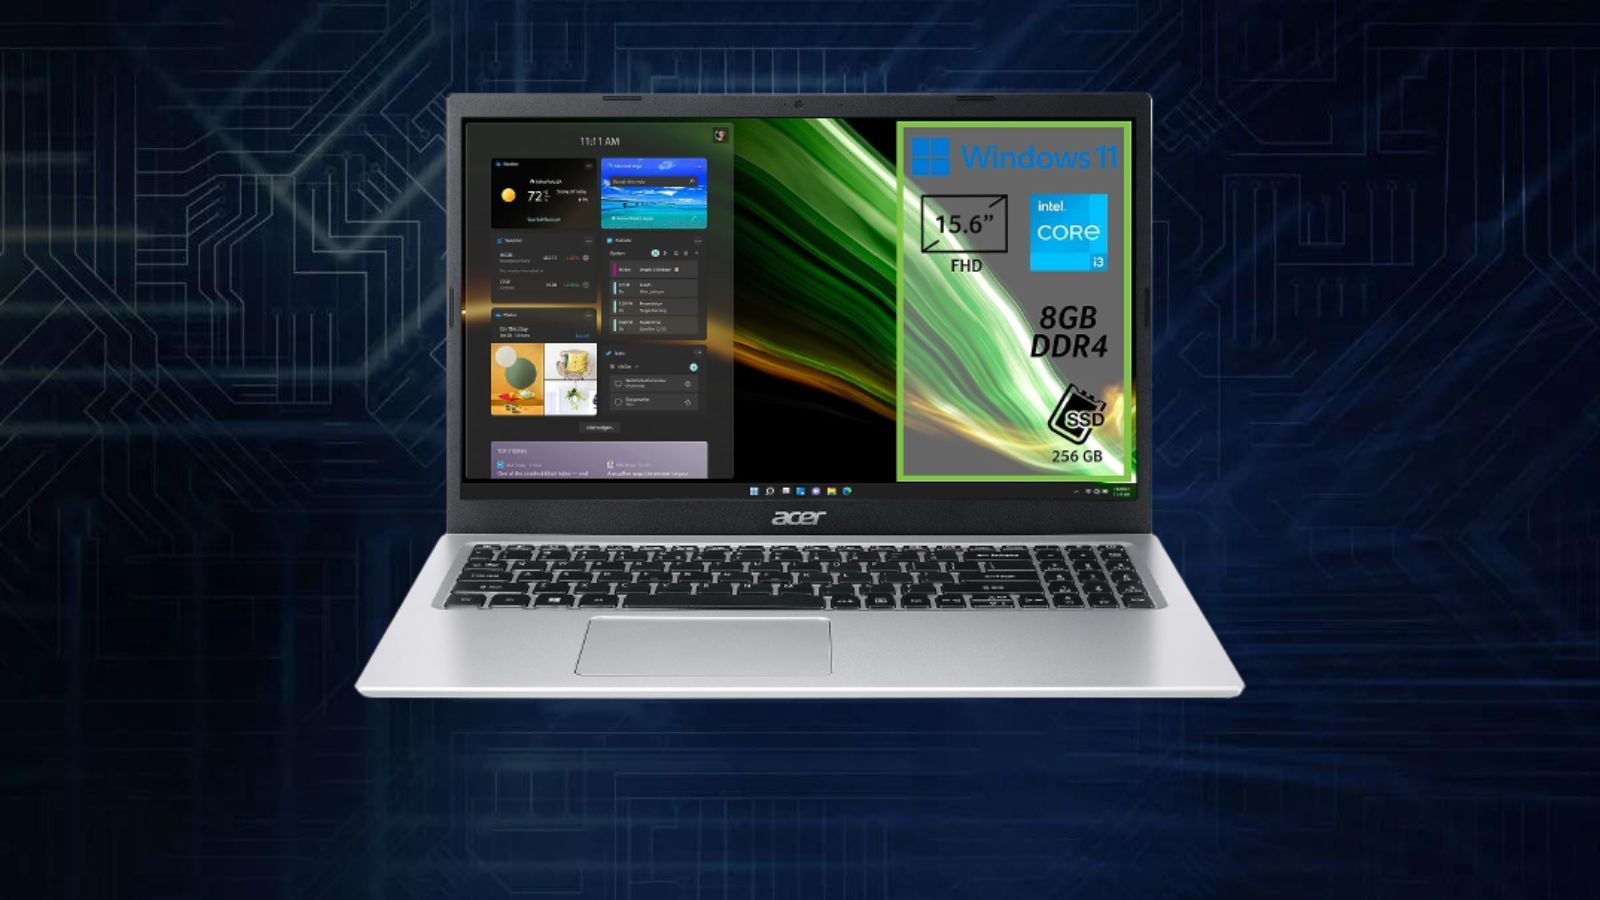 Amazon offre a 379€ un notebook Acer OTTIMO solo oggi